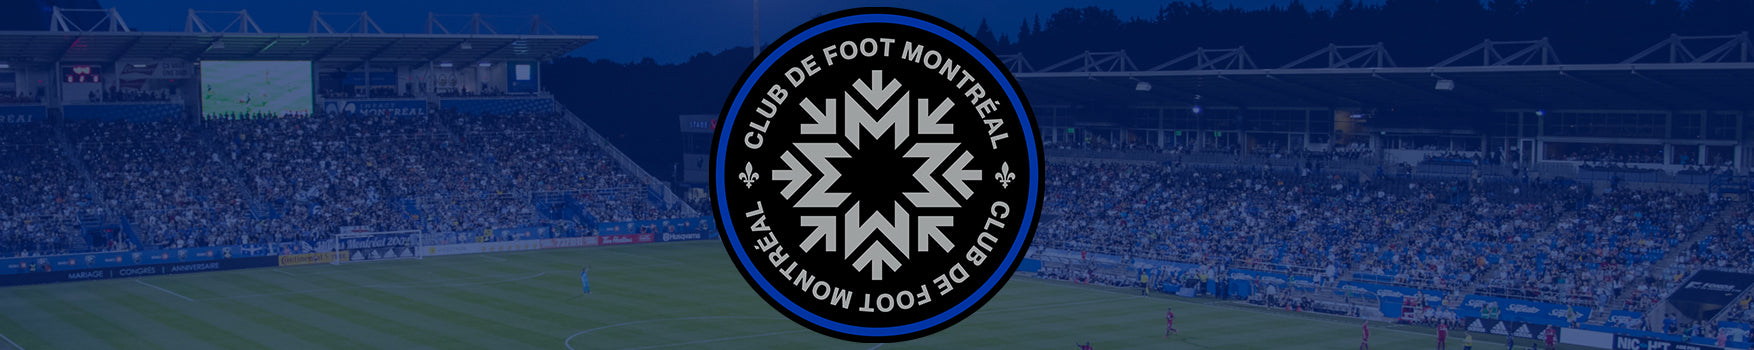 Club De Foot Montreal